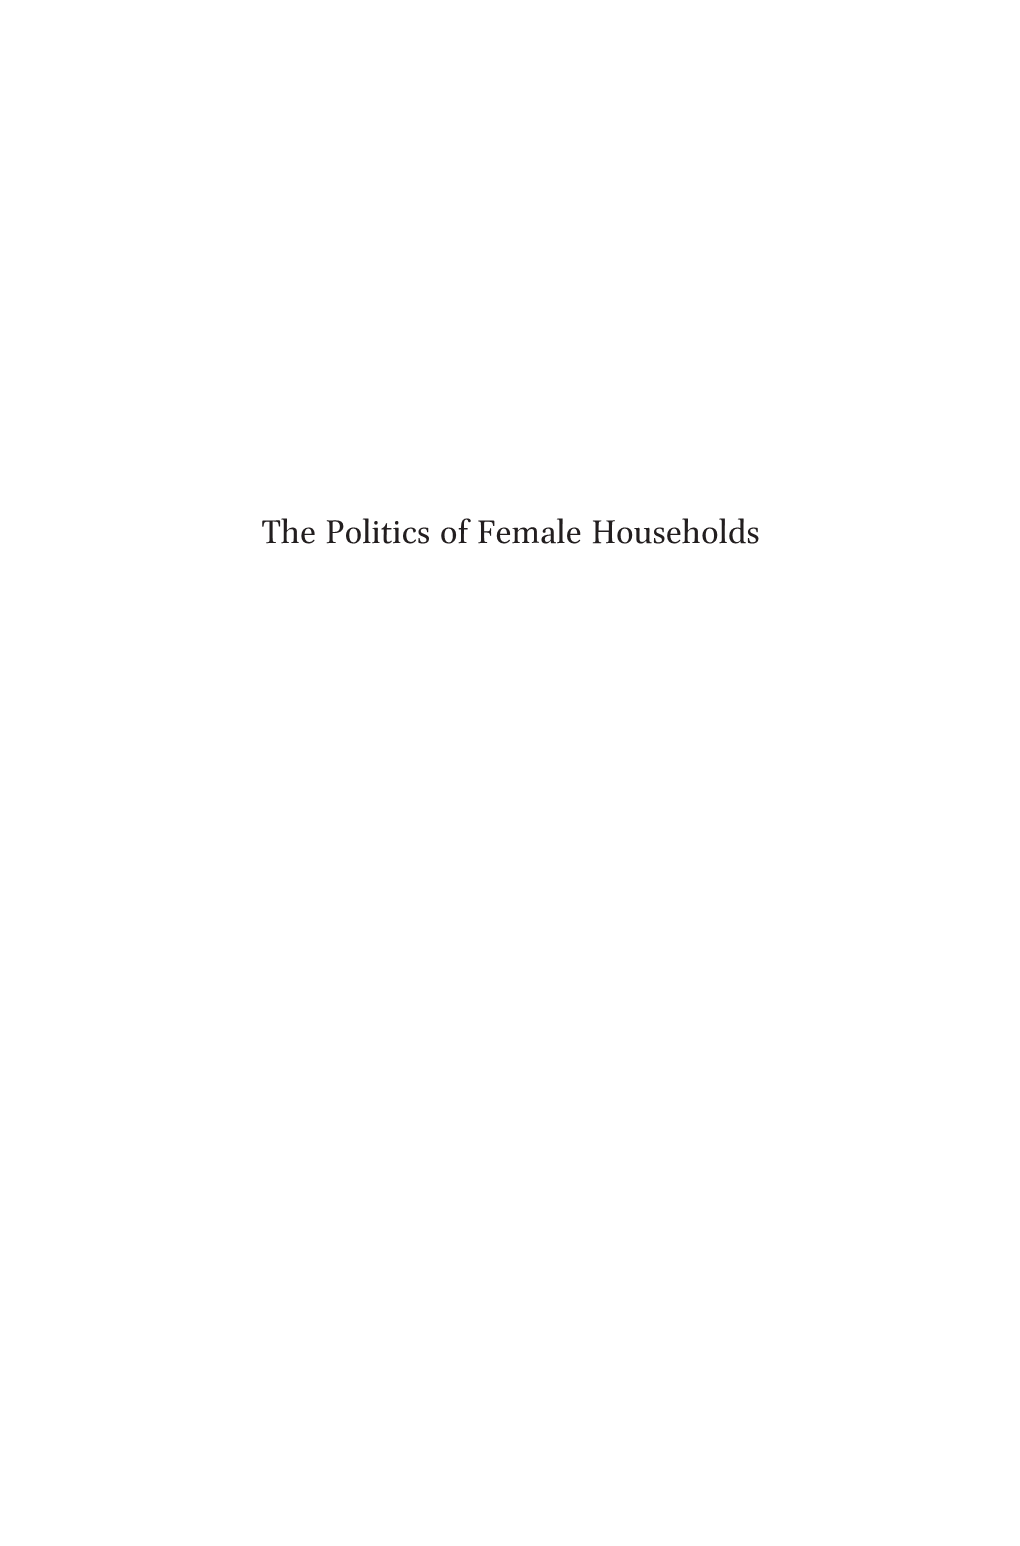 The Politics of Female Households Rulers & Elites